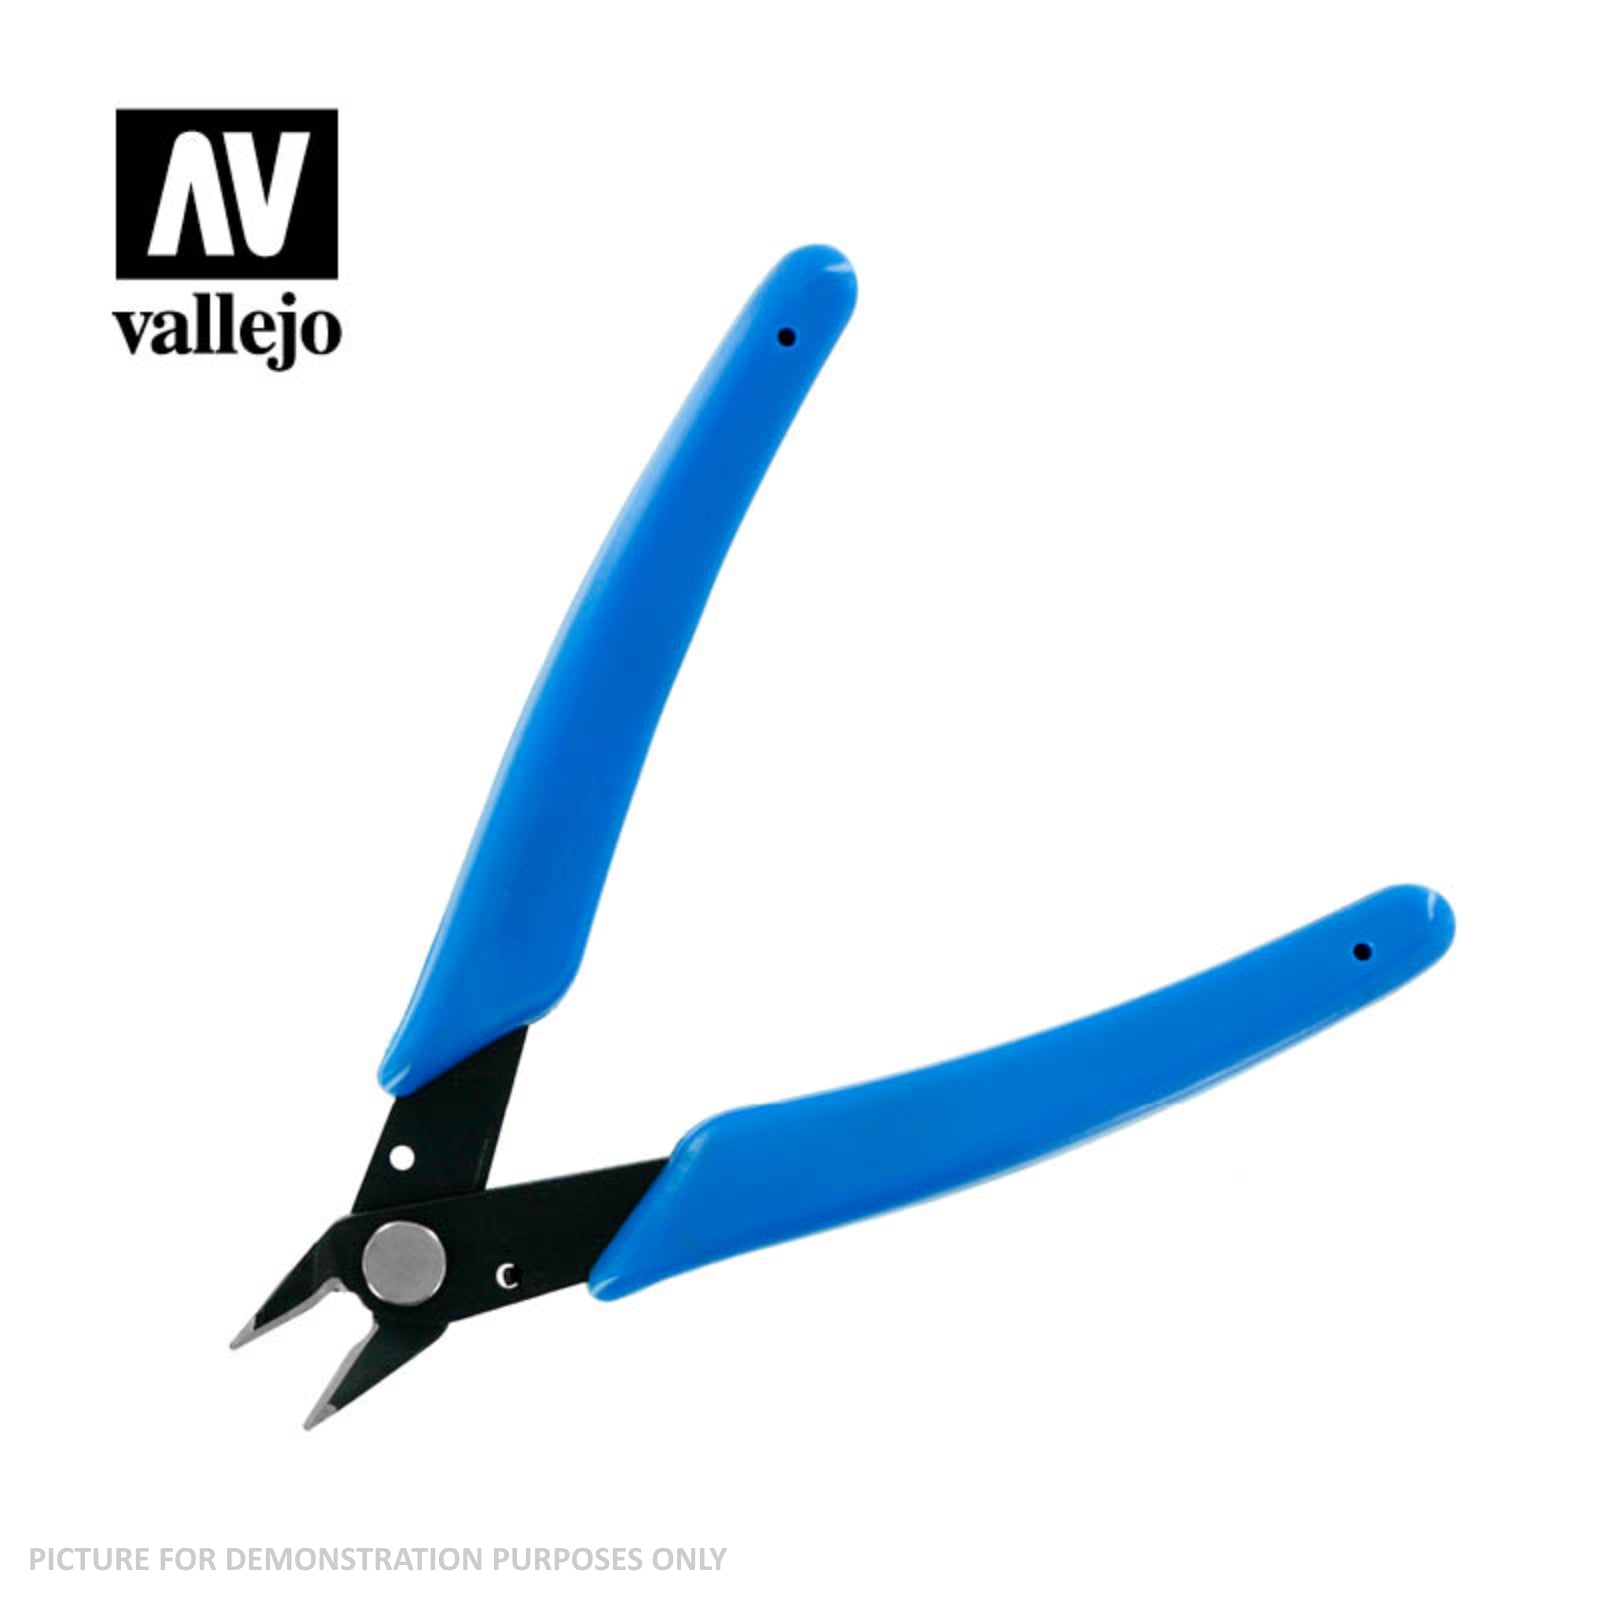 Vallejo Accessories - Flush Cutter (Sprue Cutter)